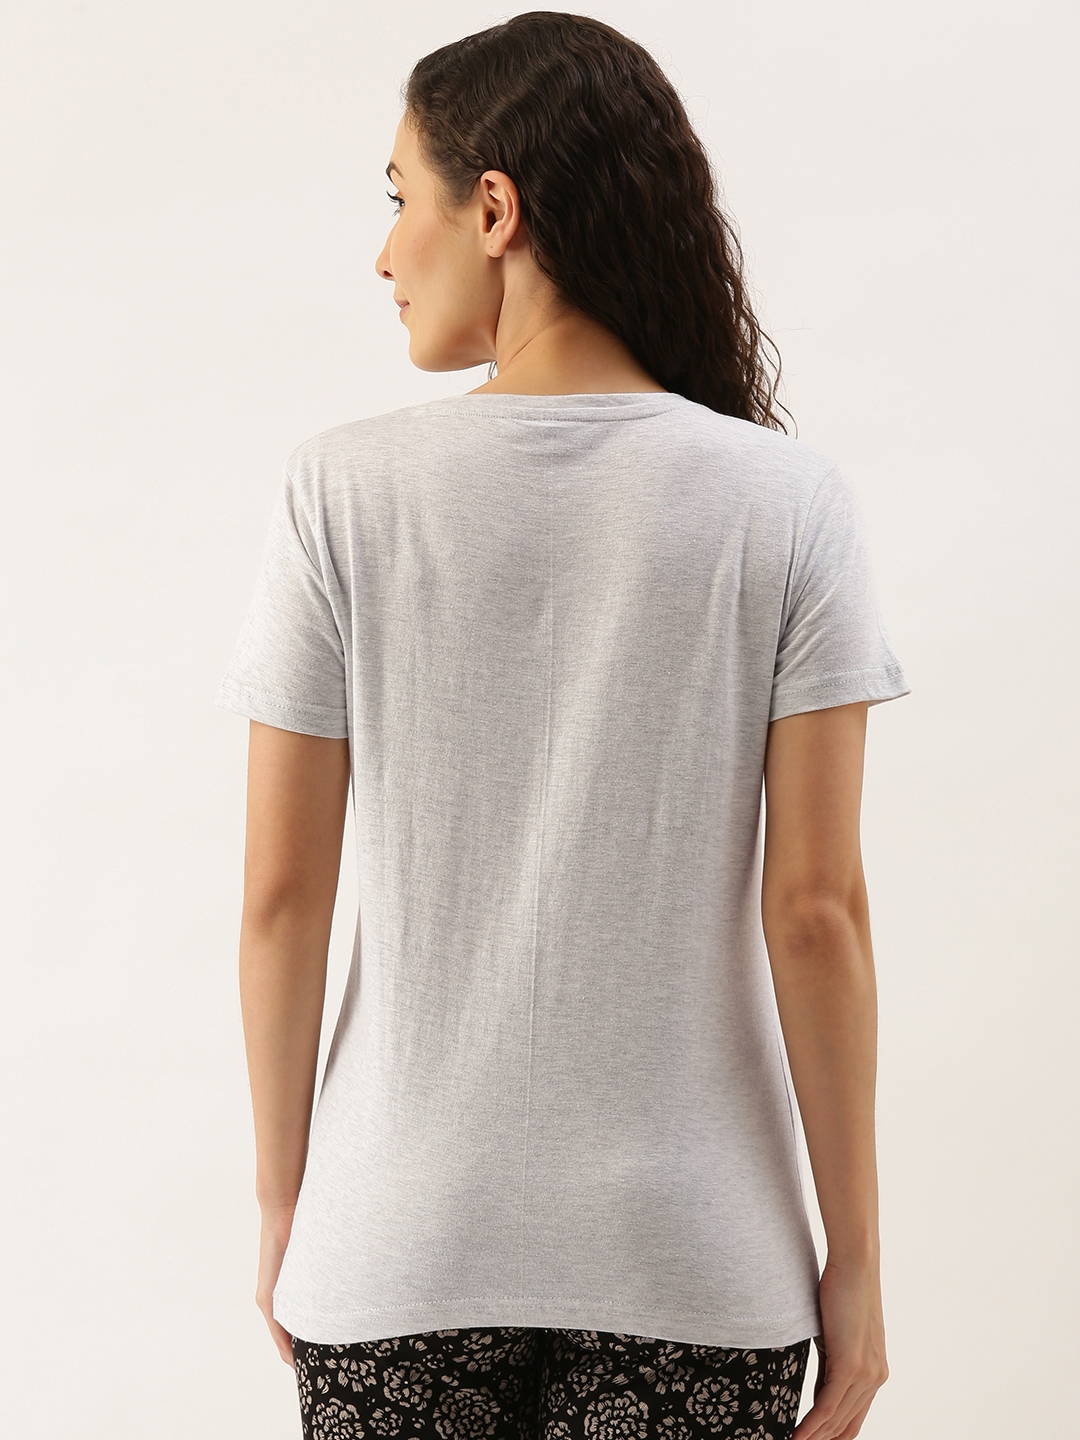 Kryptic | Women's Grey Cotton Printed T-Shirts 3